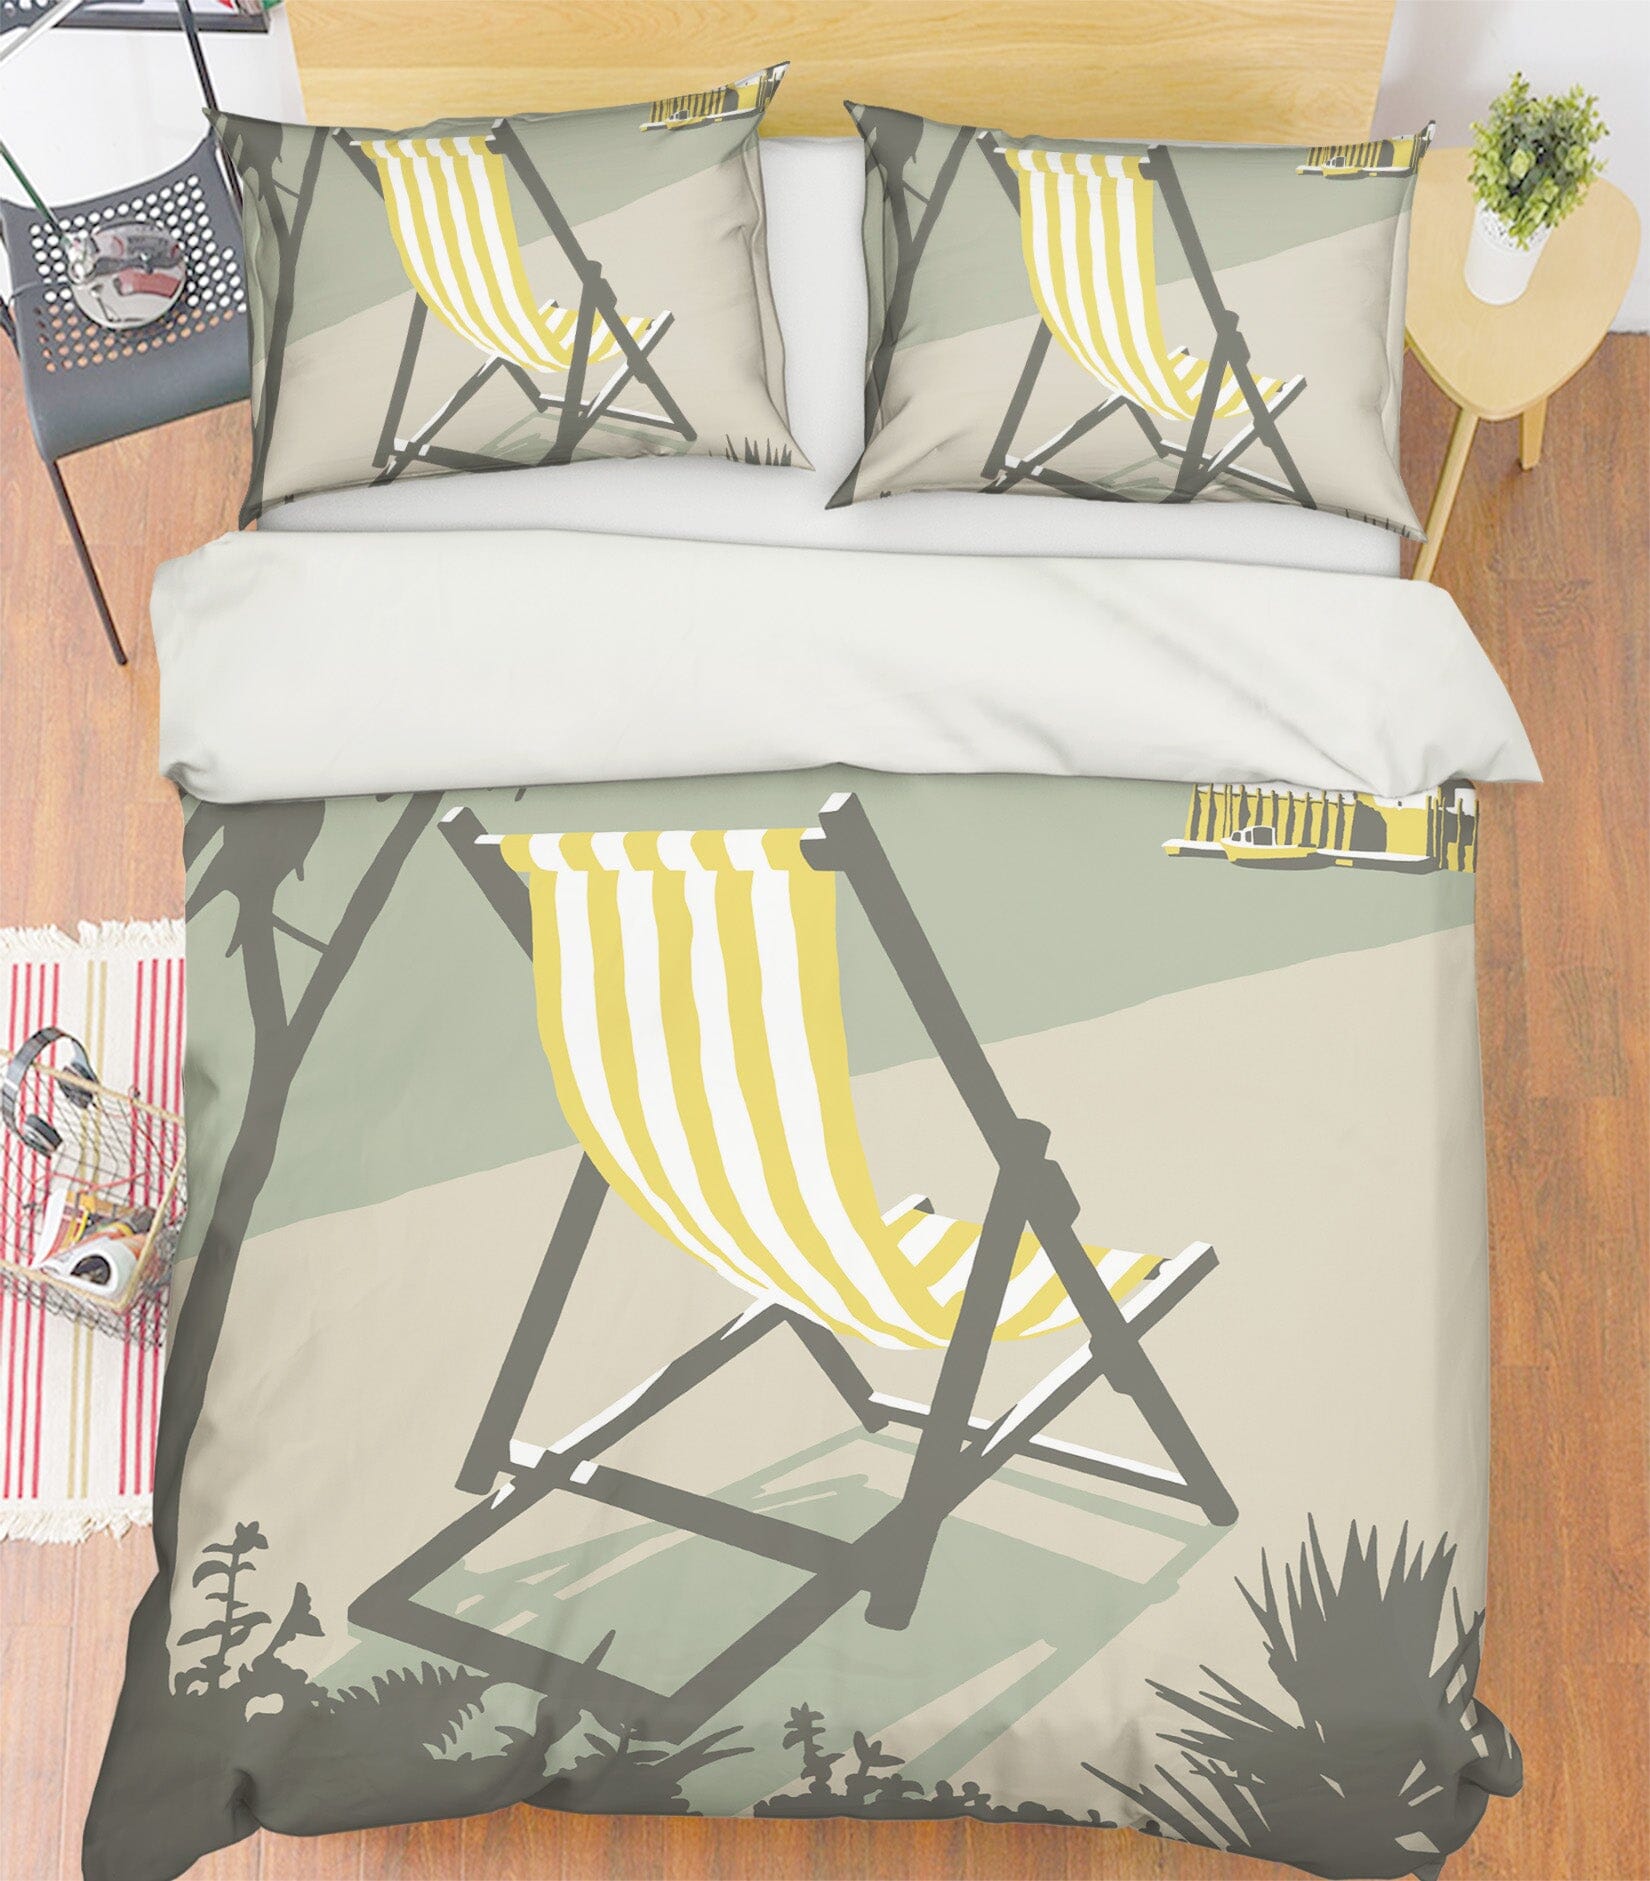 3D Rock Deckchair 2047 Steve Read Bedding Bed Pillowcases Quilt Quiet Covers AJ Creativity Home 